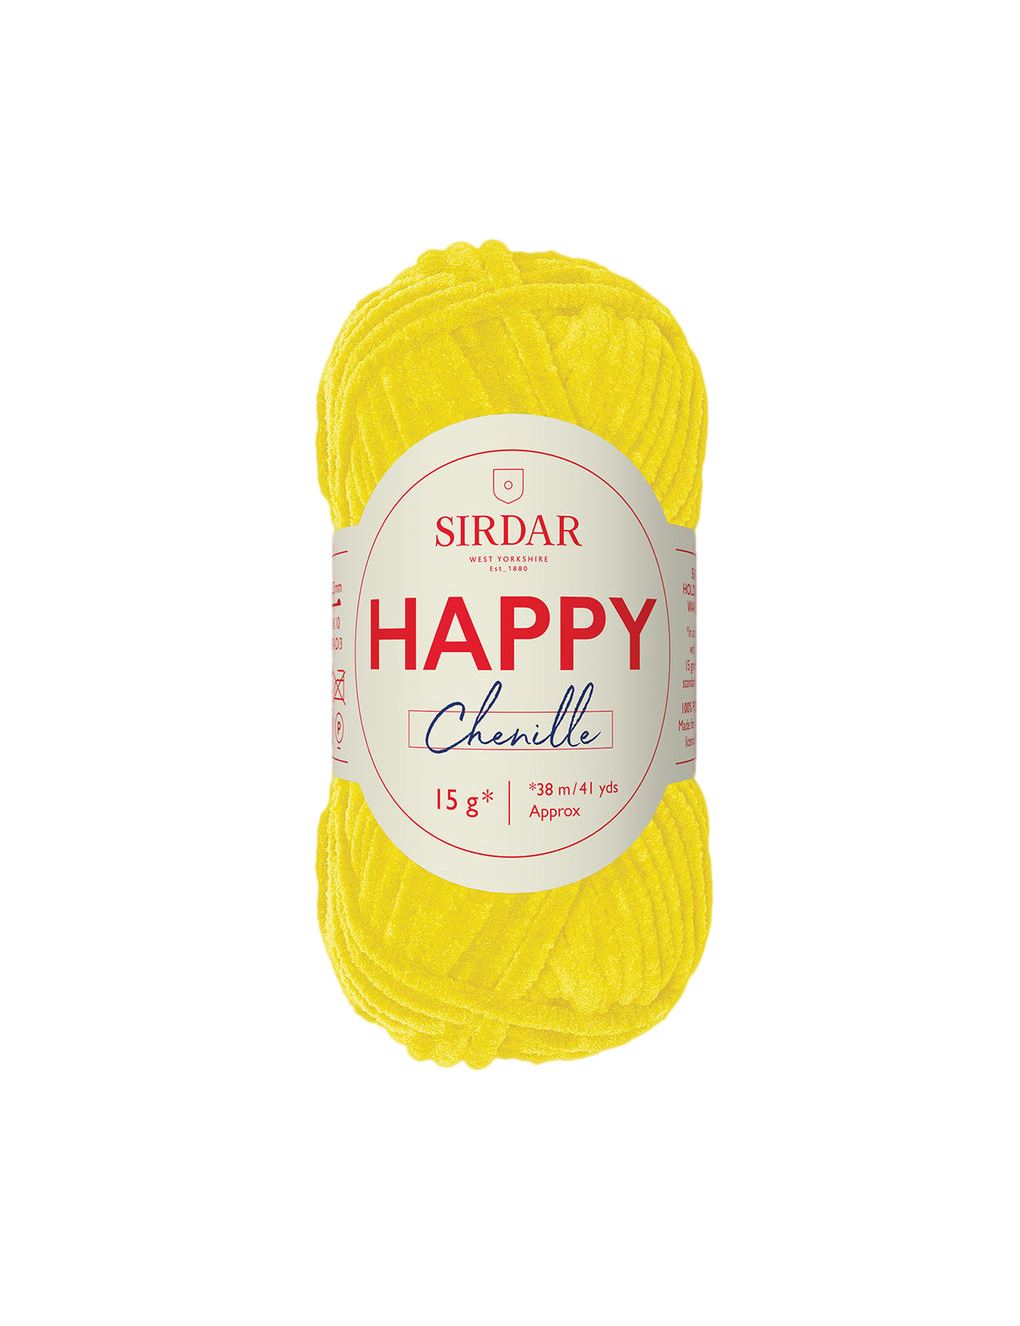 Sirdar Happy Chenille Sparkler (025) yarn - 15g